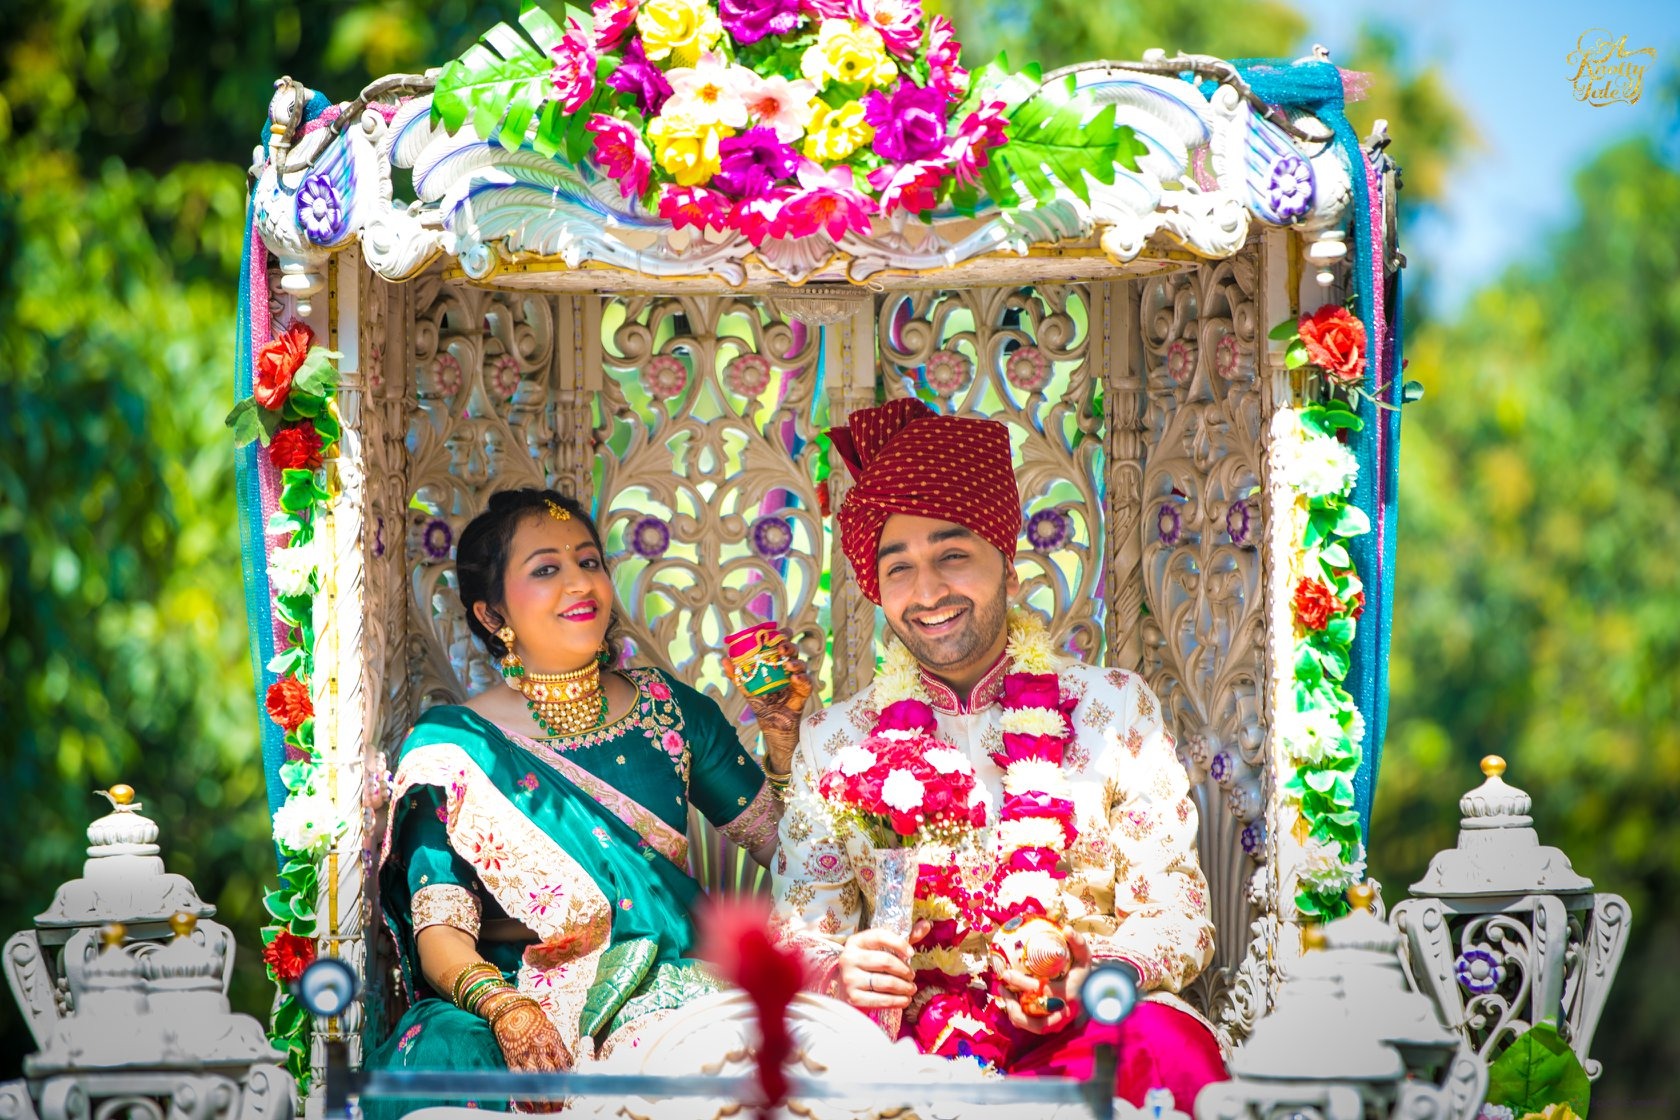 A Knotty Tale Wedding Photographer, Mumbai